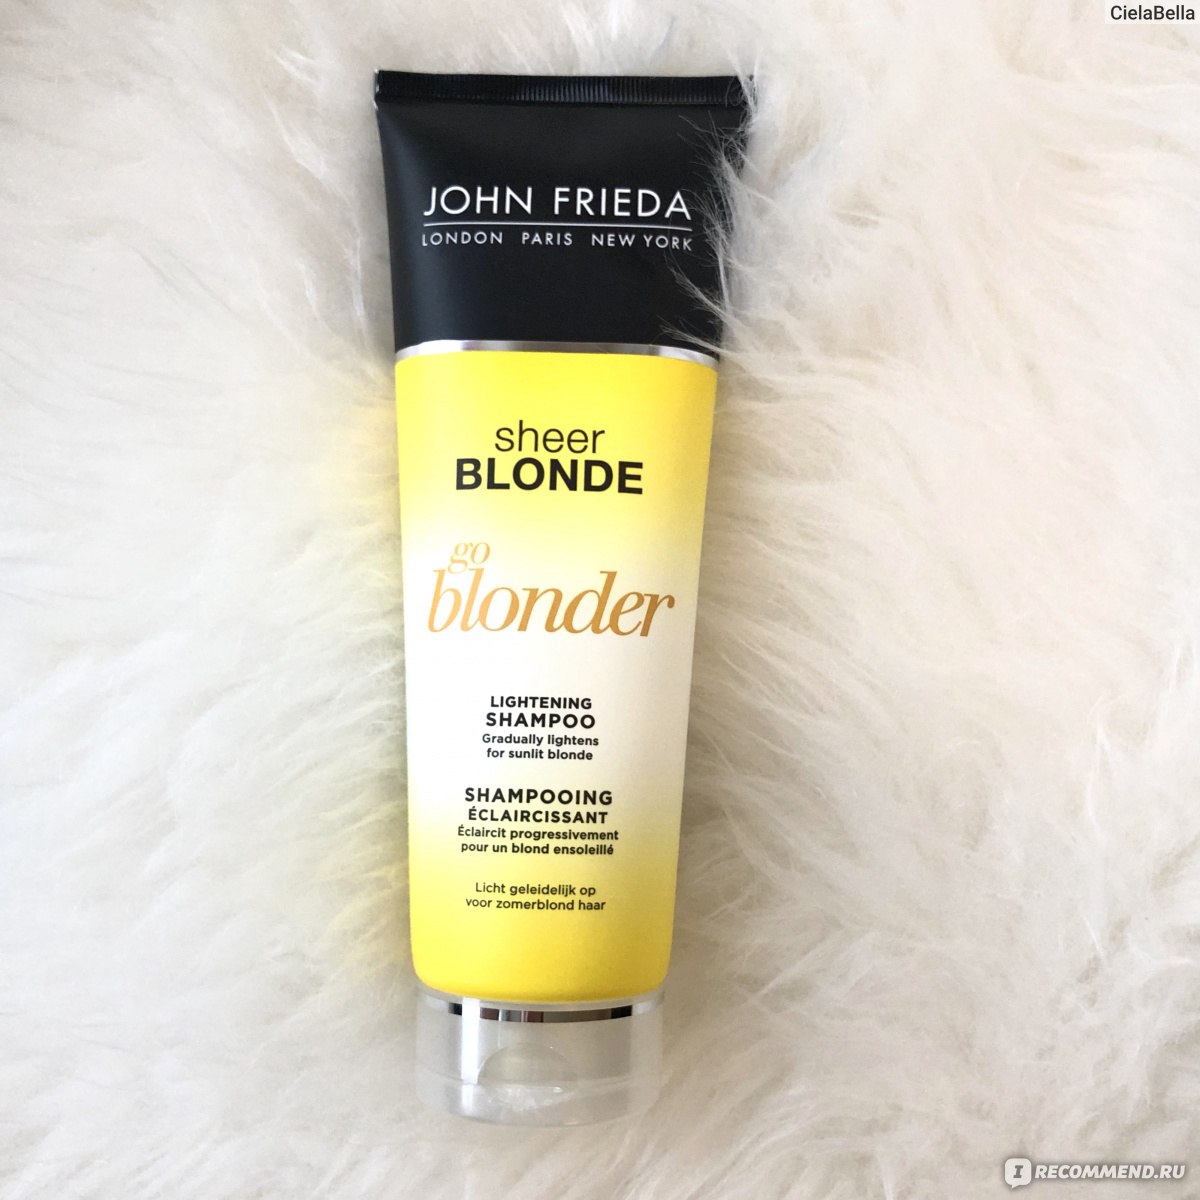 Sheer blonde. John Frieda шампунь Sheer blonde go blonder. Осветляющий шампунь John Frieda. John Frieda Sheer blonde шампунь холодный блонд. Осветляющий шампунь для брюнеток.